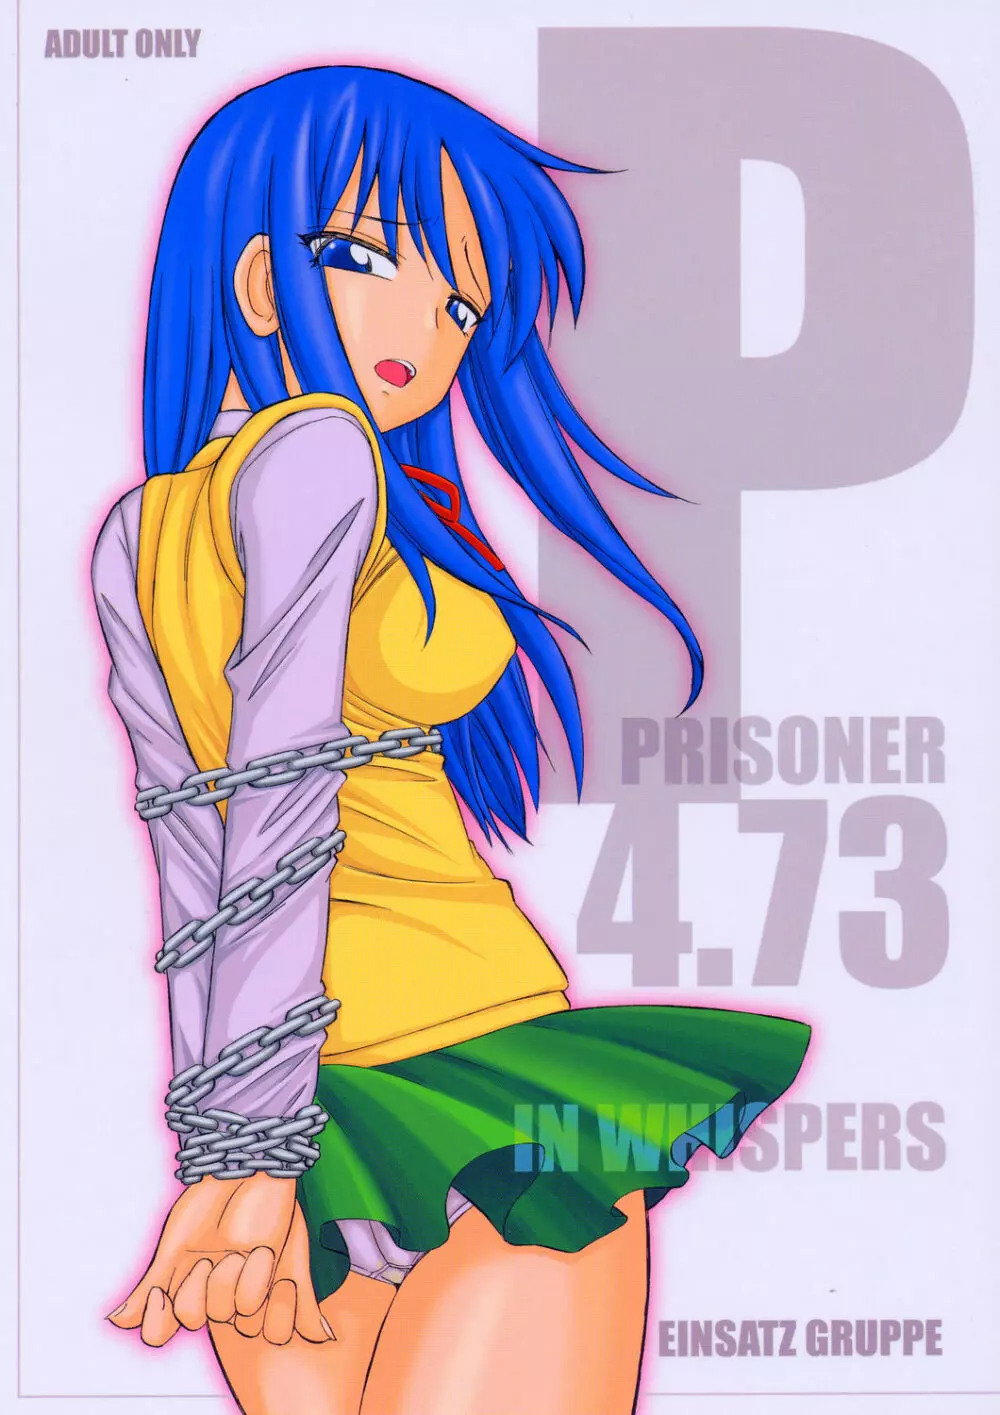 P4.73 PRISONER 4.73 IN WHISPERS